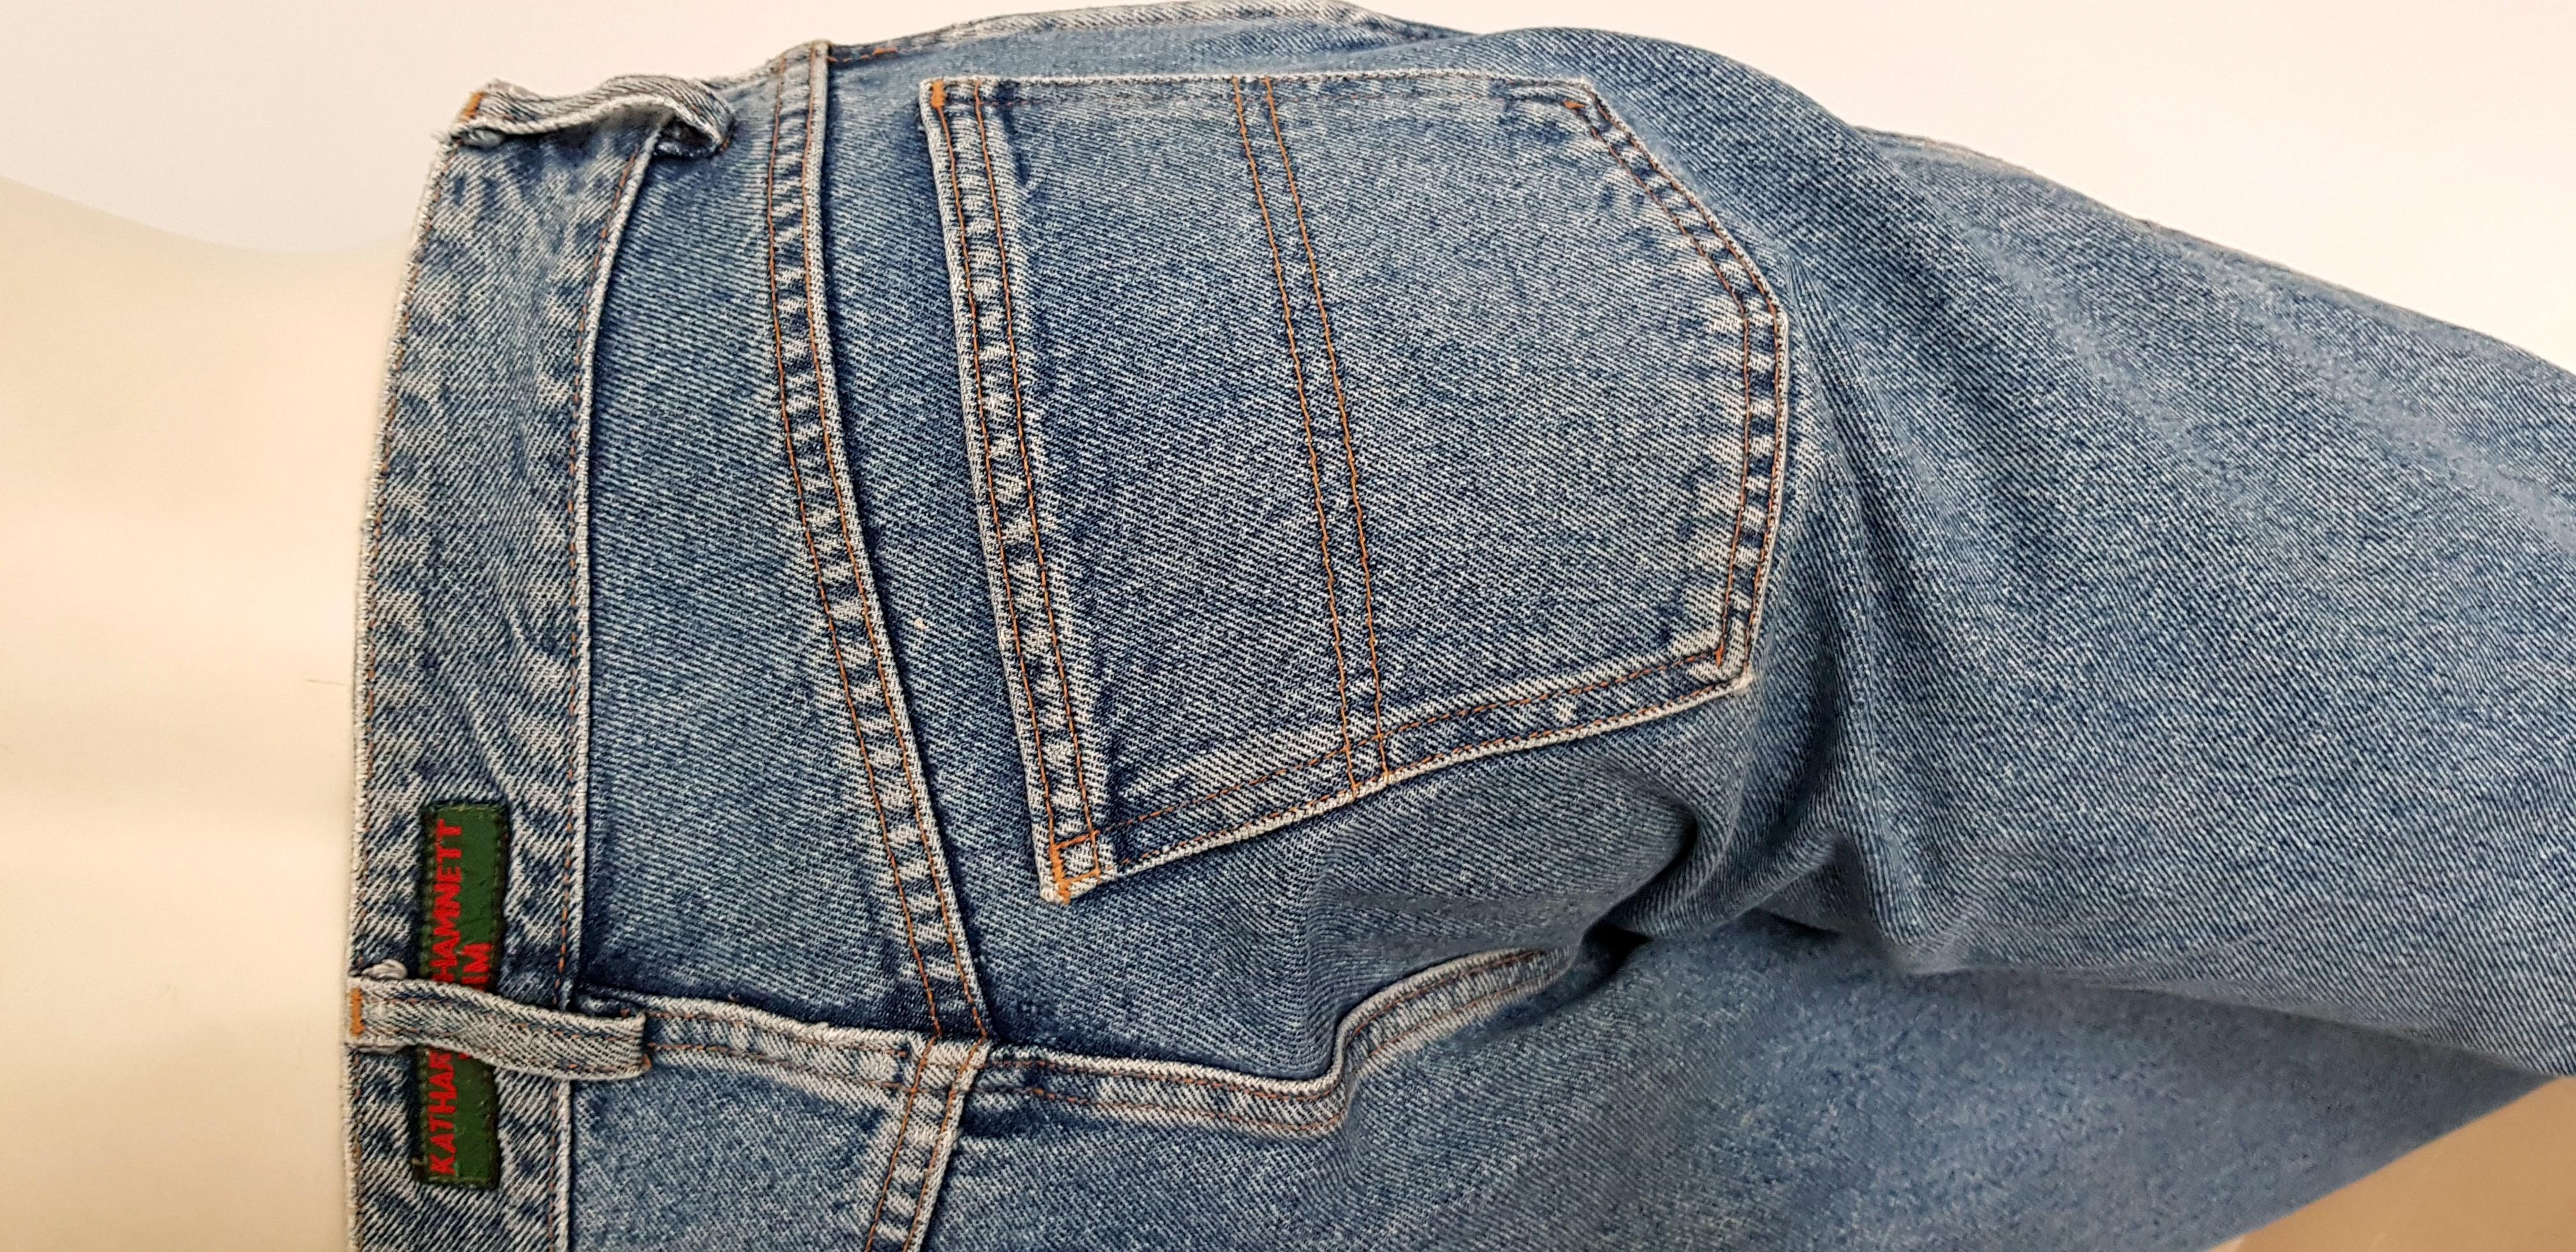 Katharine HAMNETT Jeans Size S / M - Unworn, New For Sale 2